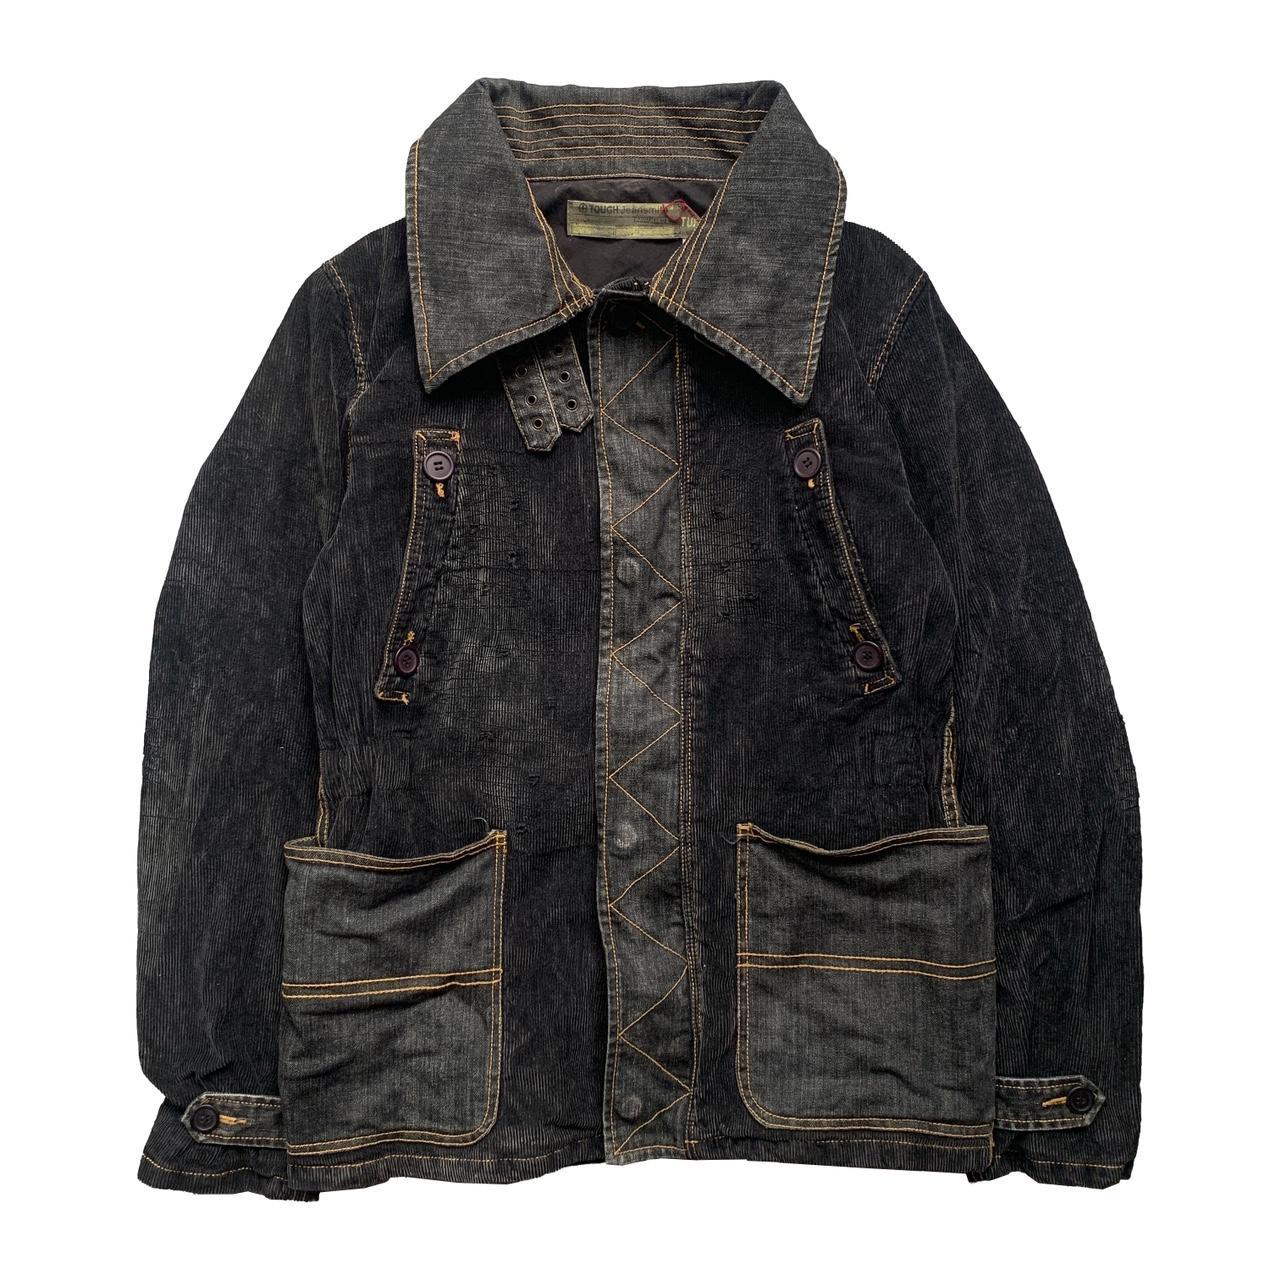 Tough Jeans Black Corduroy Coat Jacket 2 Zips Flaw:... - Depop